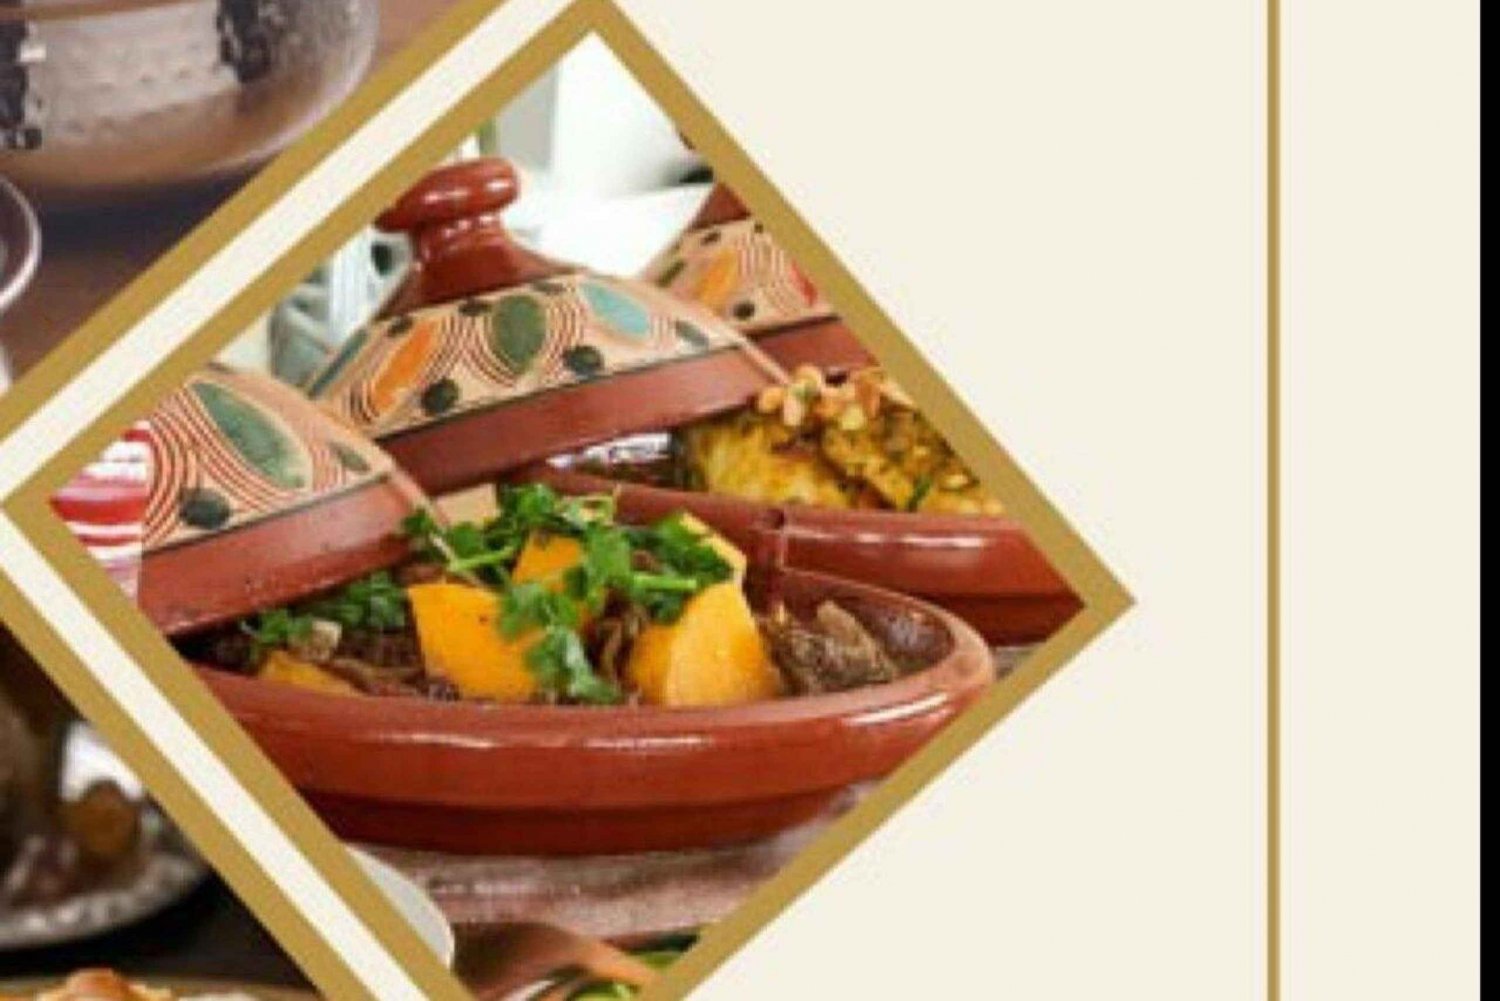 Las Américas, Tenerife: Tradisjonell marokkansk mat